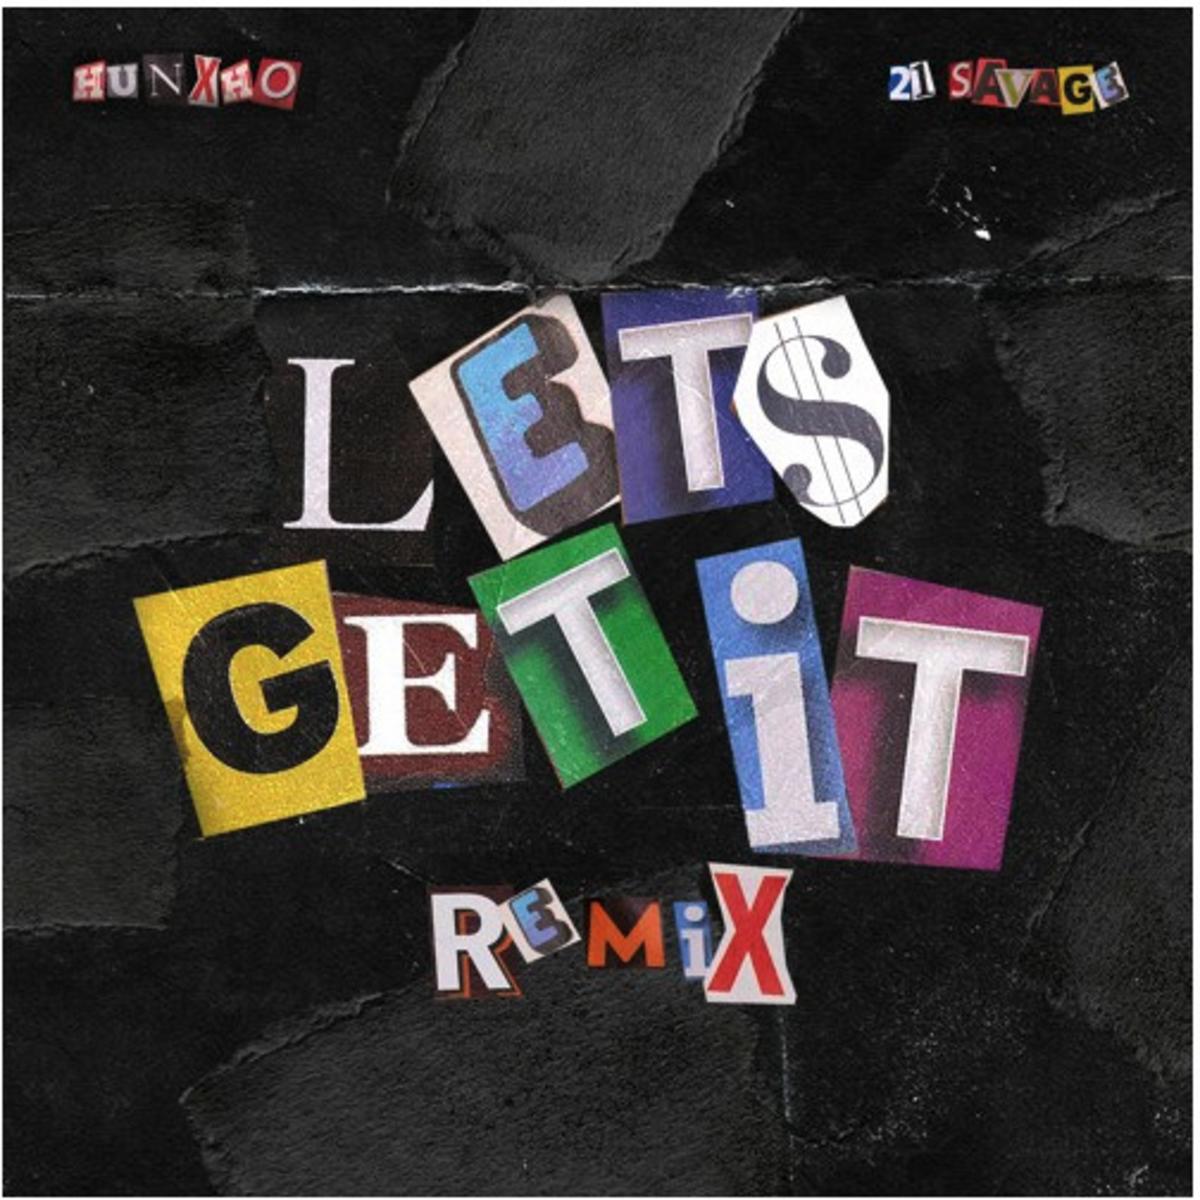 DOWNLOAD MP3: Hunxho – Let&#39;s Get It (Remix) Ft. 21 Savage | Legitmuzic